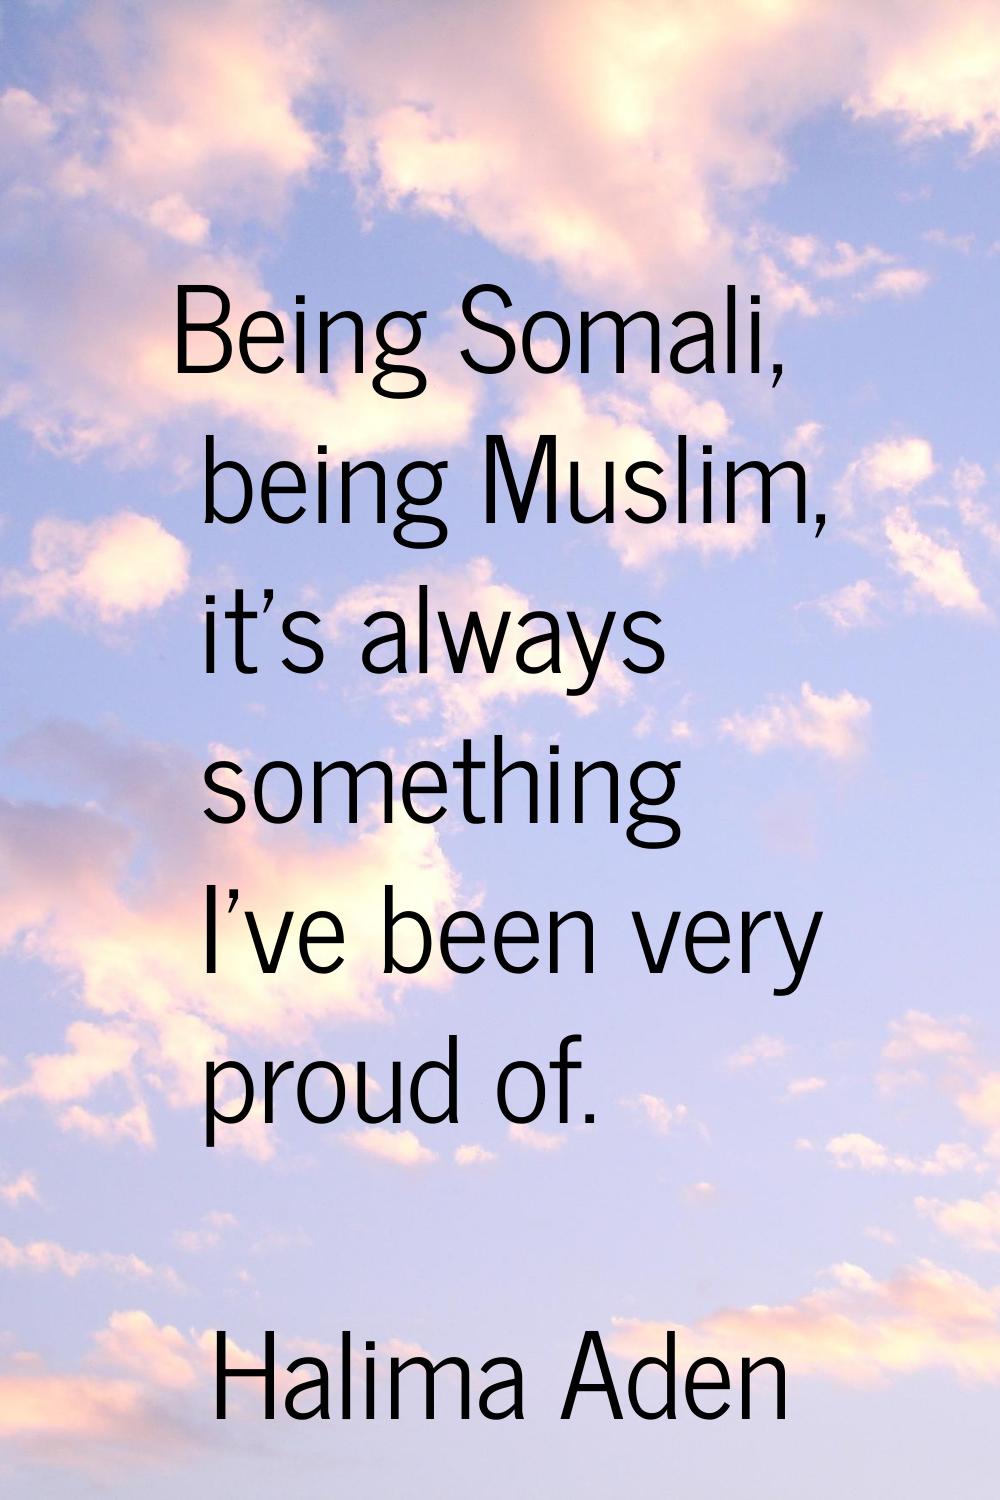 Being Somali, being Muslim, it's always something I've been very proud of.